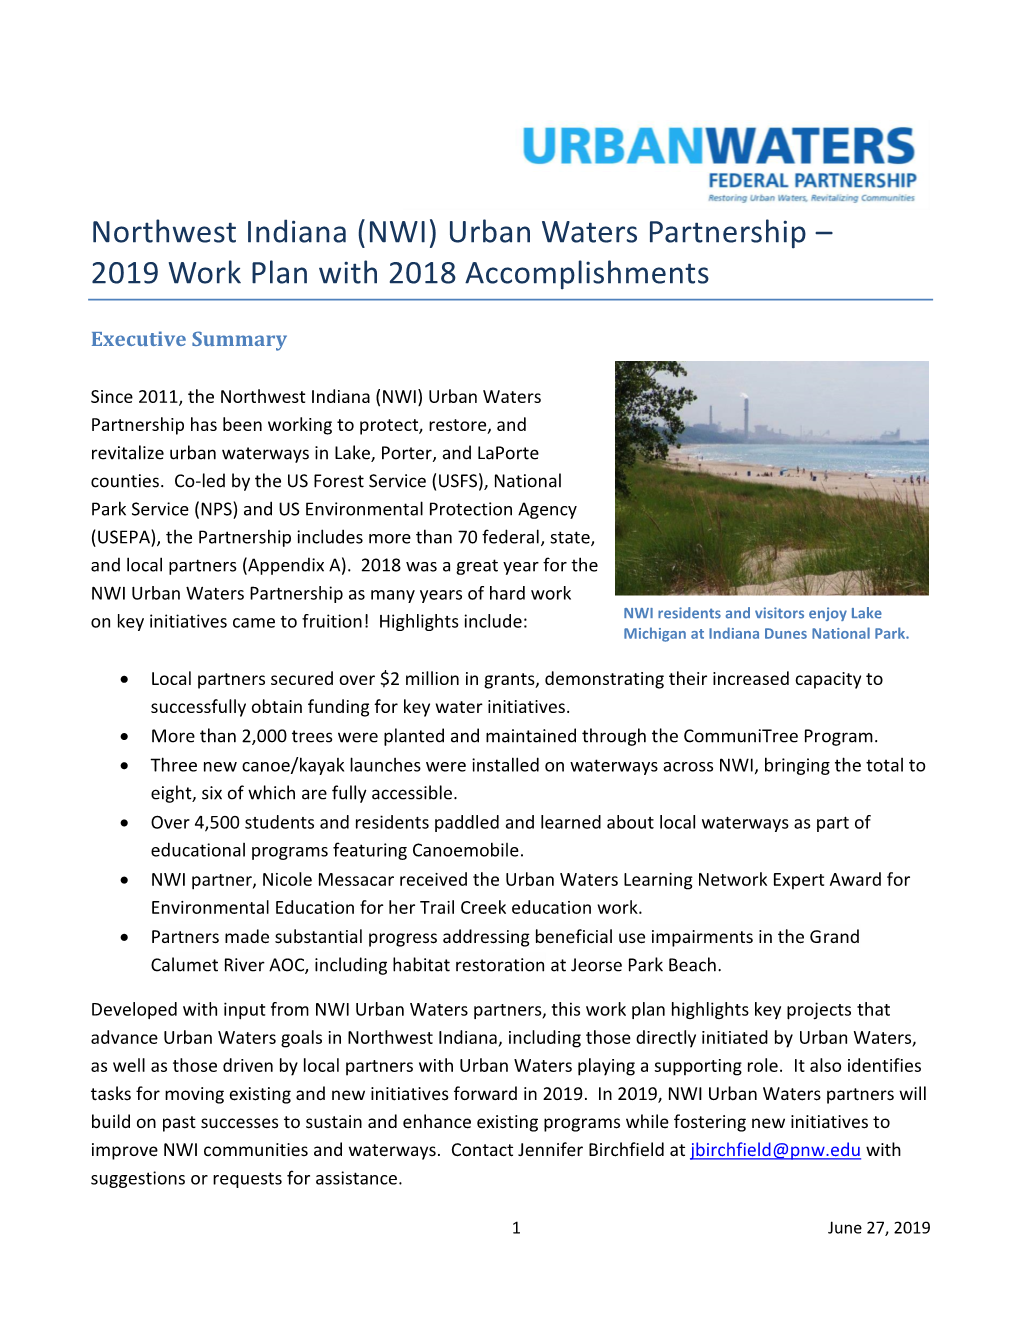 Northwest Indiana (NWI) Urban Waters Partnership – 2019 Work Plan with 2018 Accomplishments